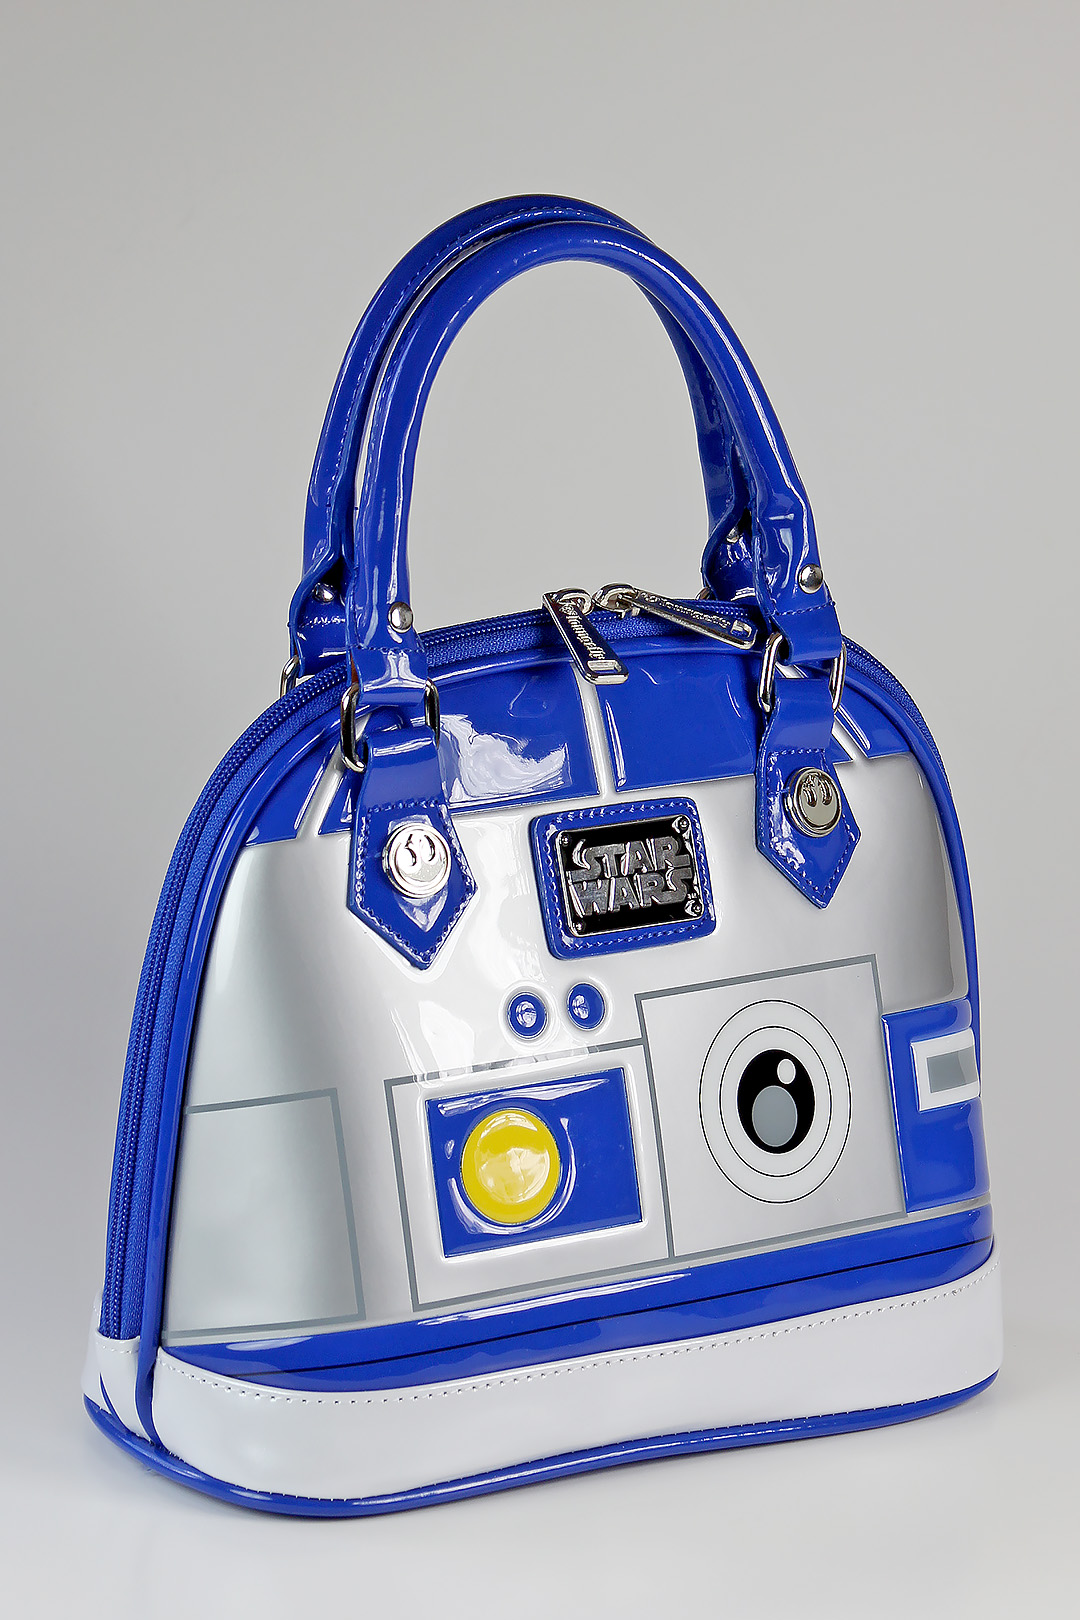 Loungefly - R2-D2 handbag (back)